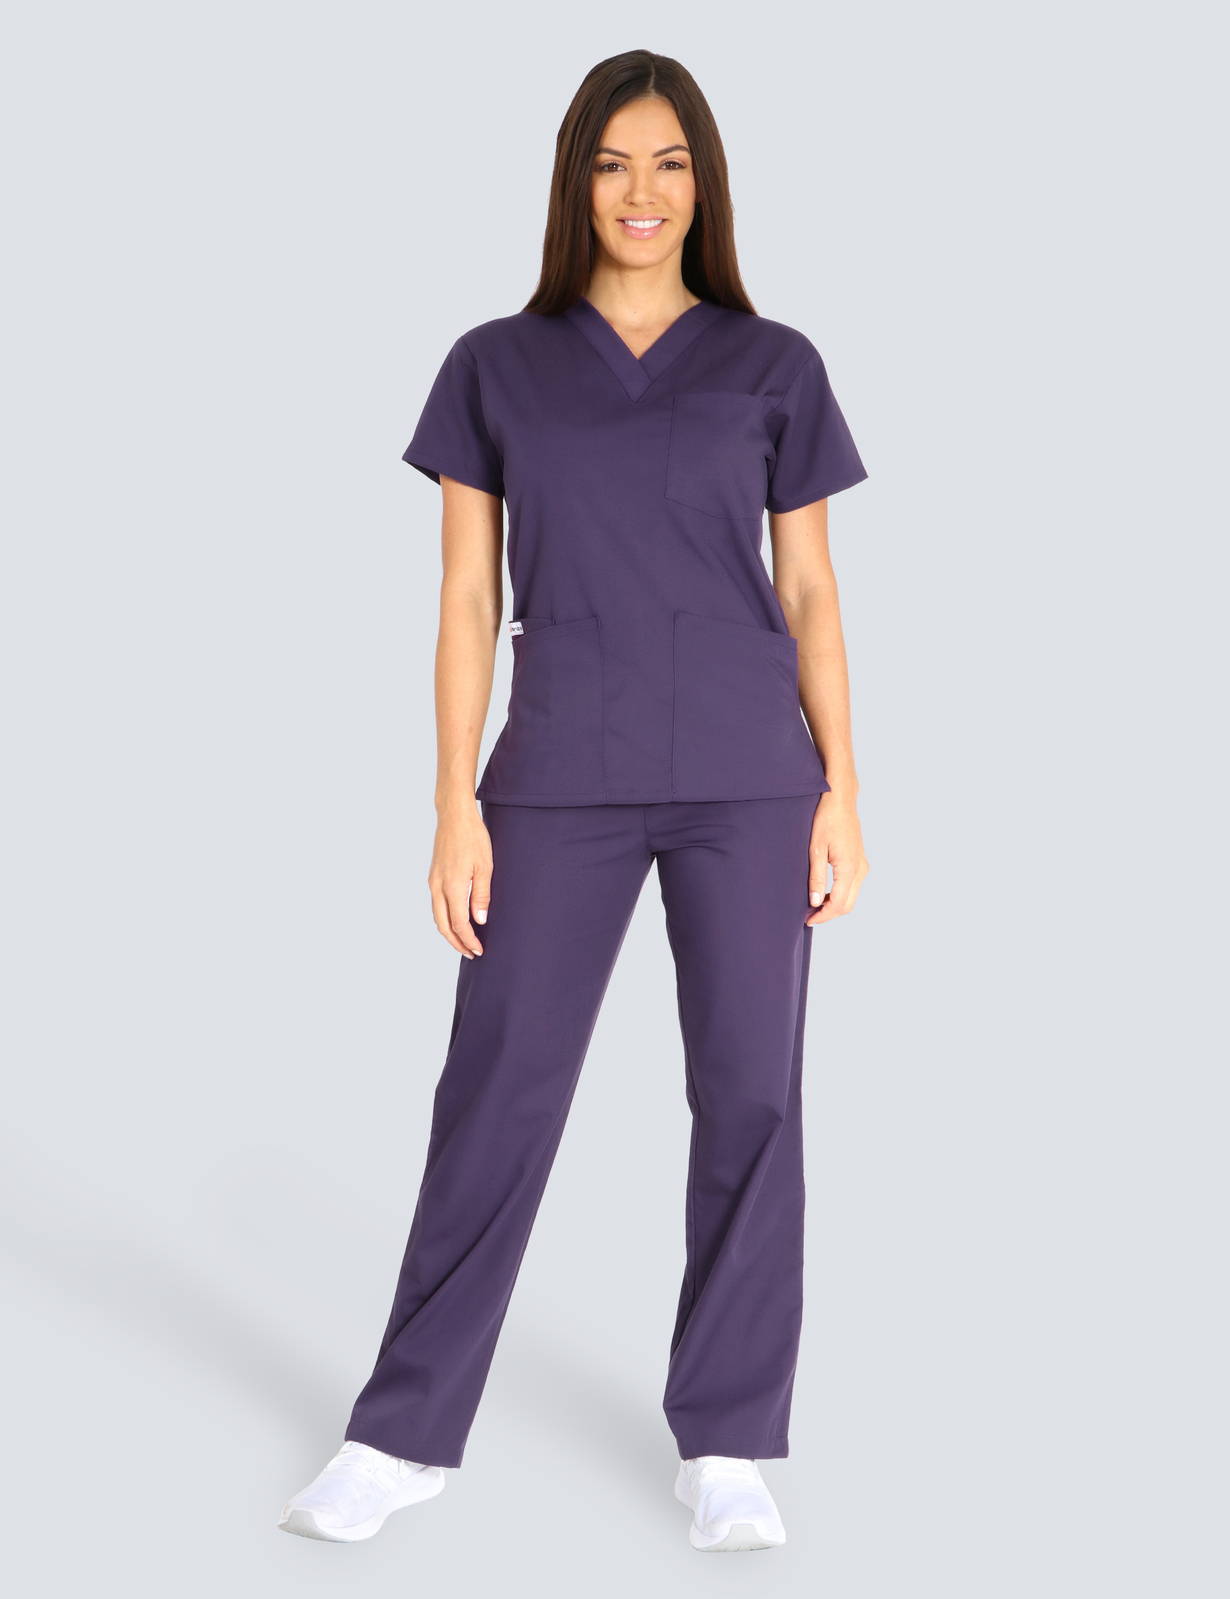 Toowoomba Hospital Pharmacy Assistant Uniform Set Bundle (4 Pocket Top and Cargo Pants in Aubergine incl Logo)